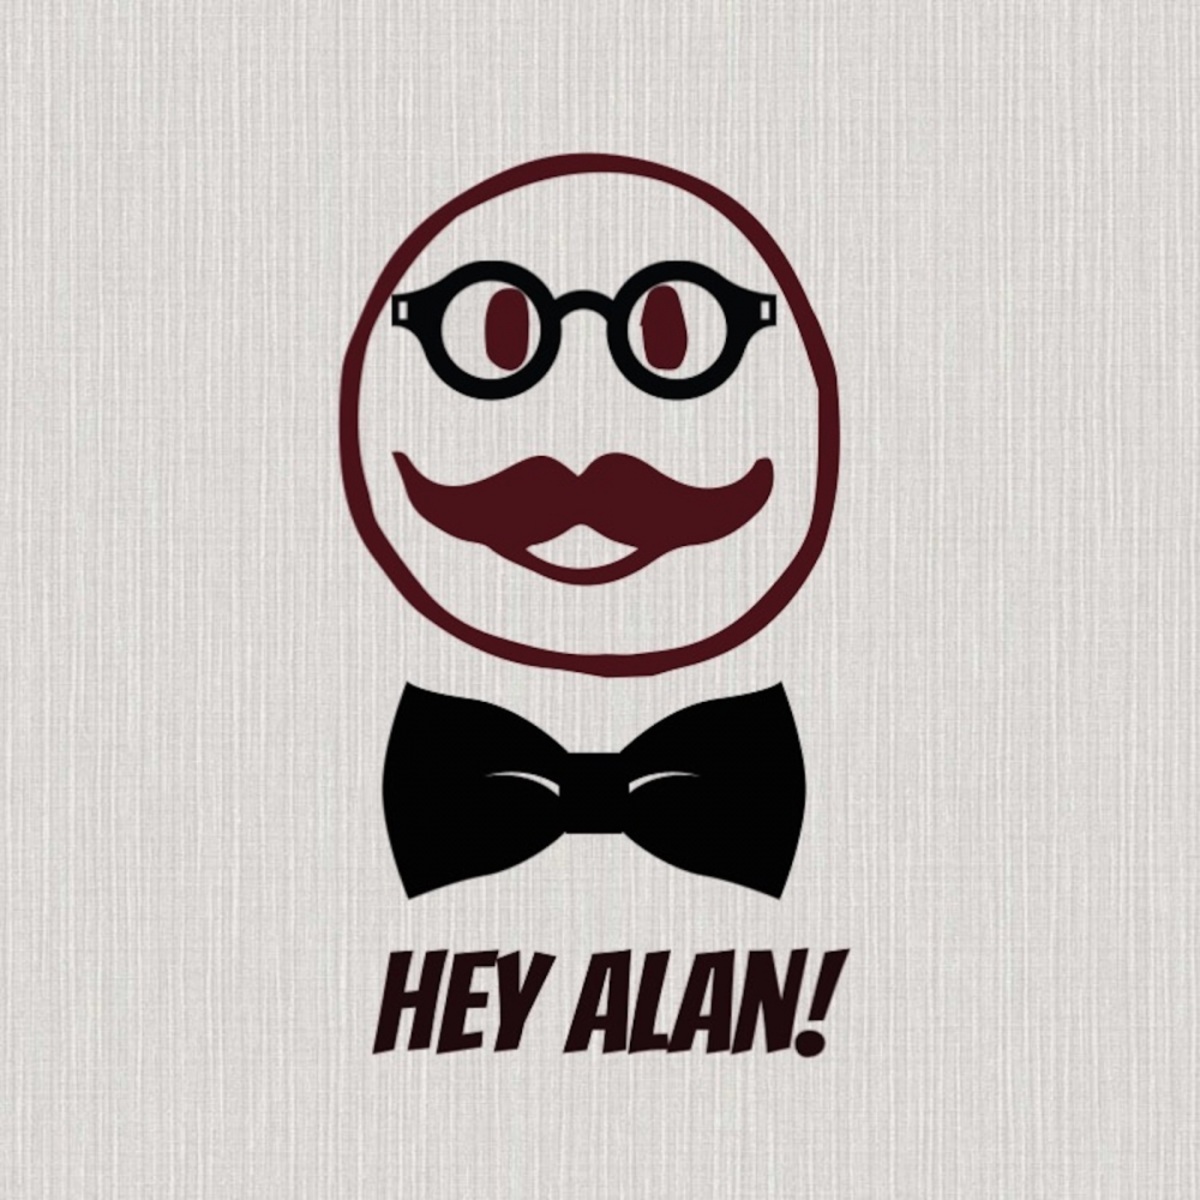 Hey Alan! - Je Vous en Prie (Electro Swing Mix) / MCT Luxury